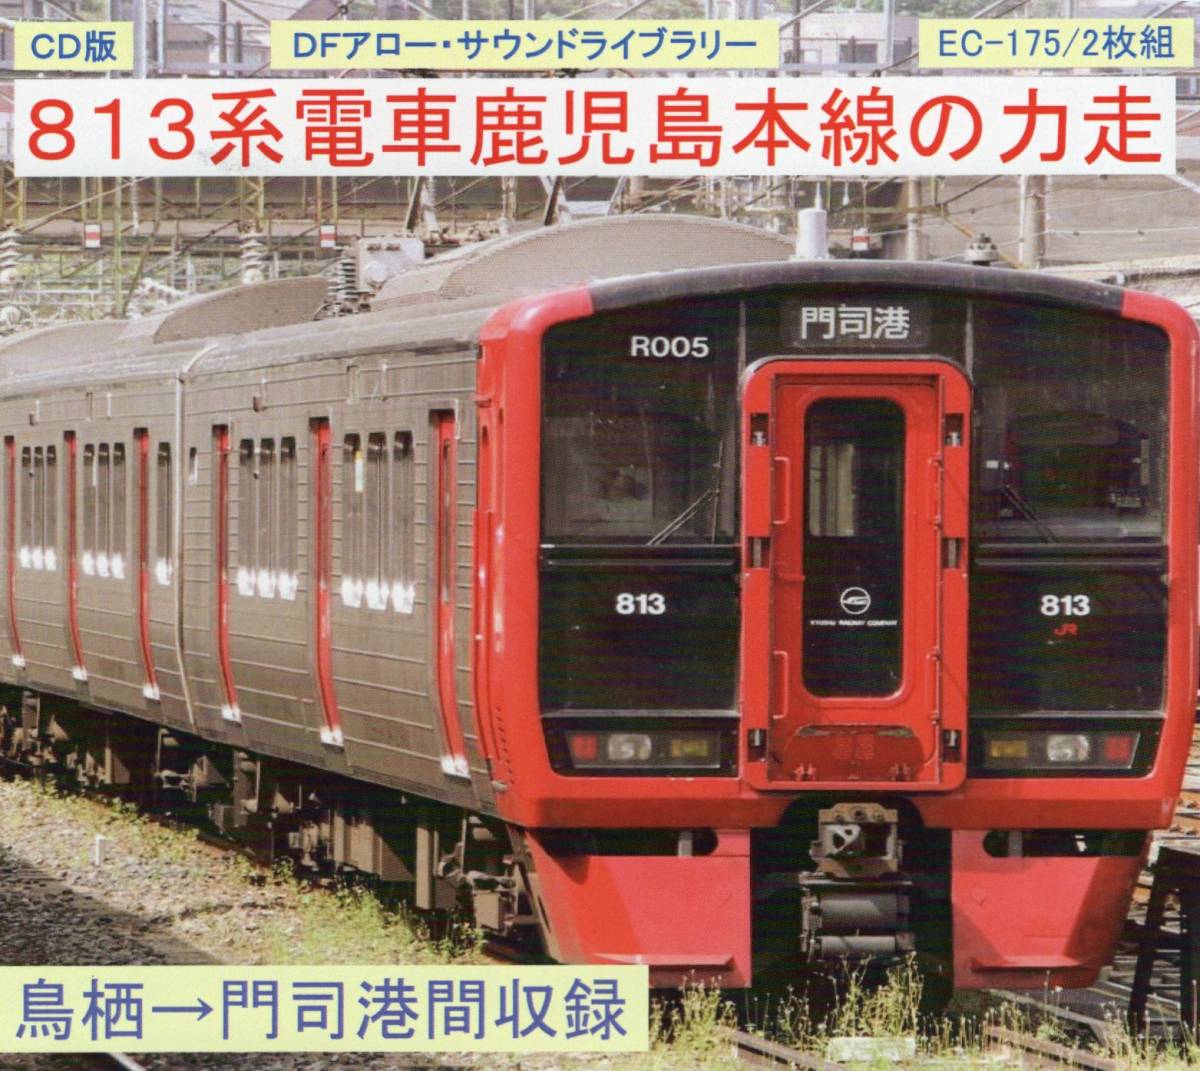 DF Arrow *CD version *EC-175*813 series train Kagoshima book@ line. power mileage 